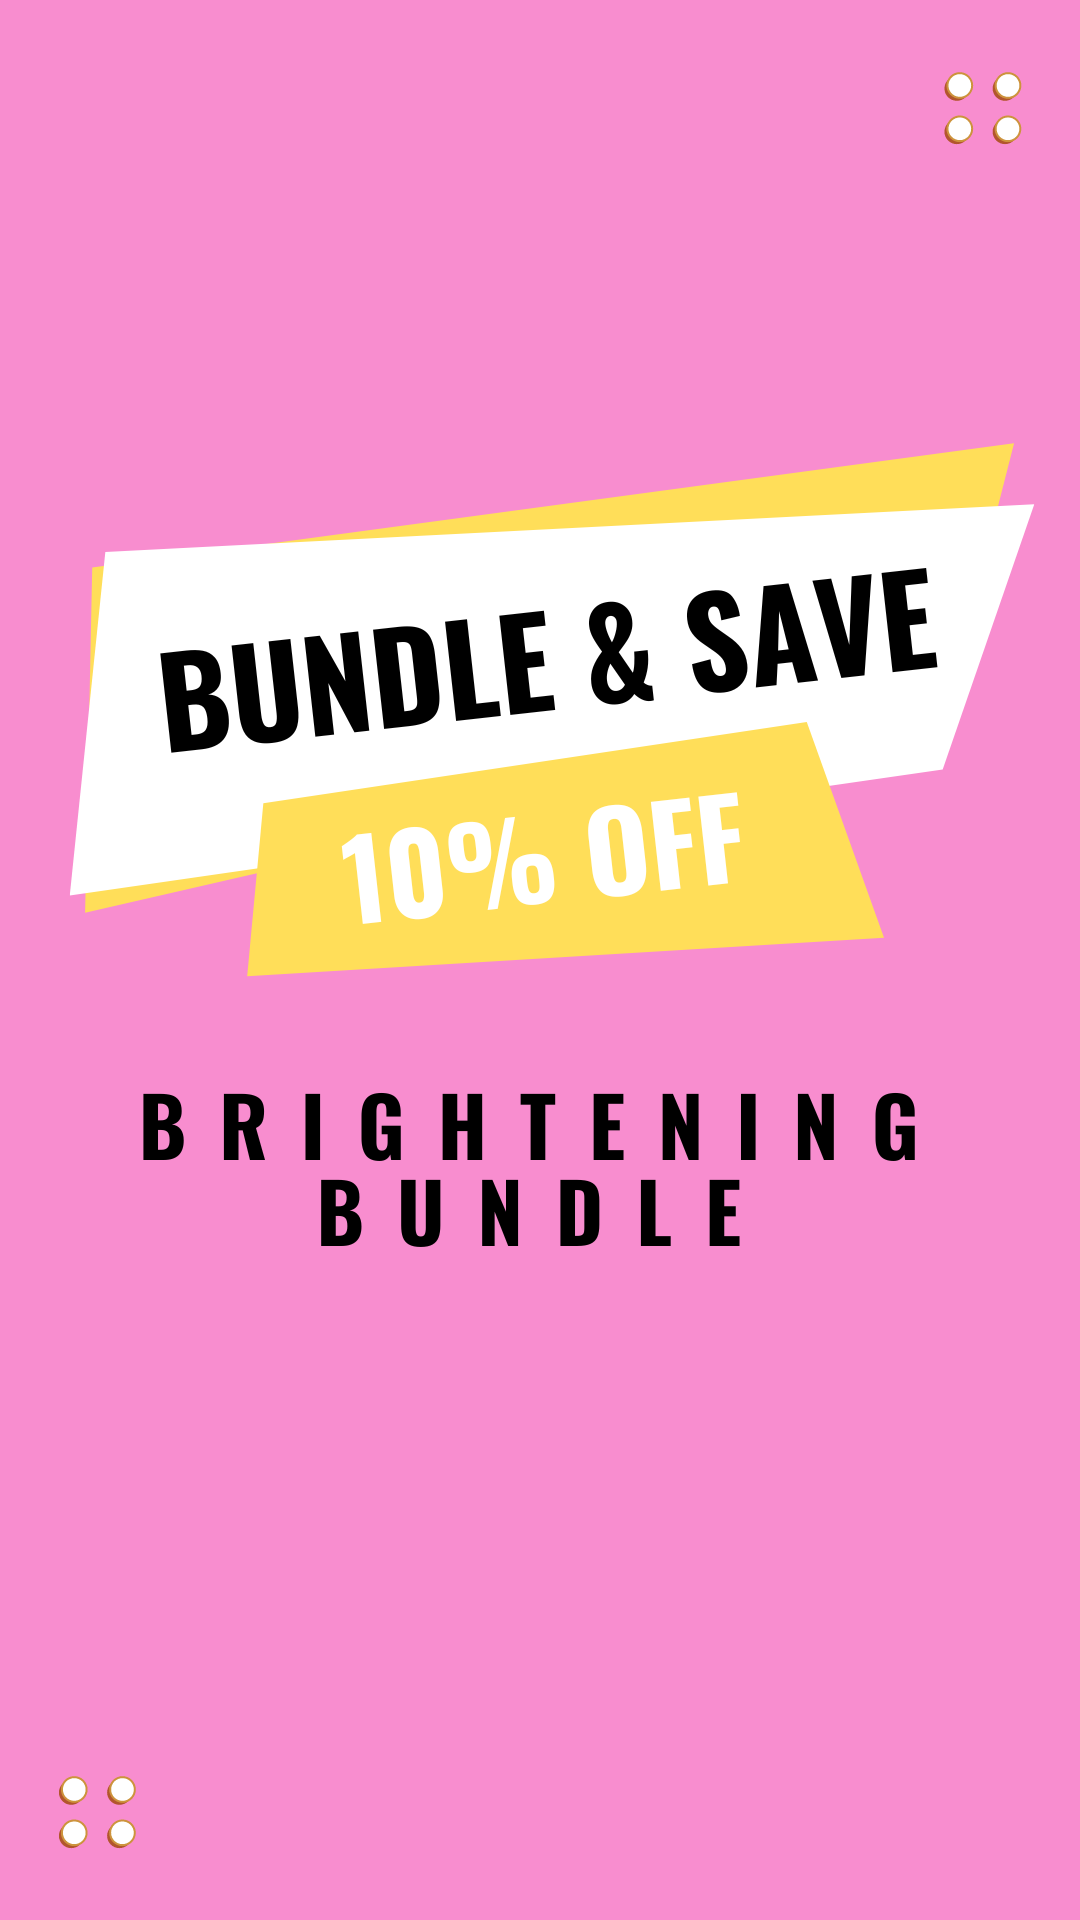 Skin Brightening Bundle - Save £££s